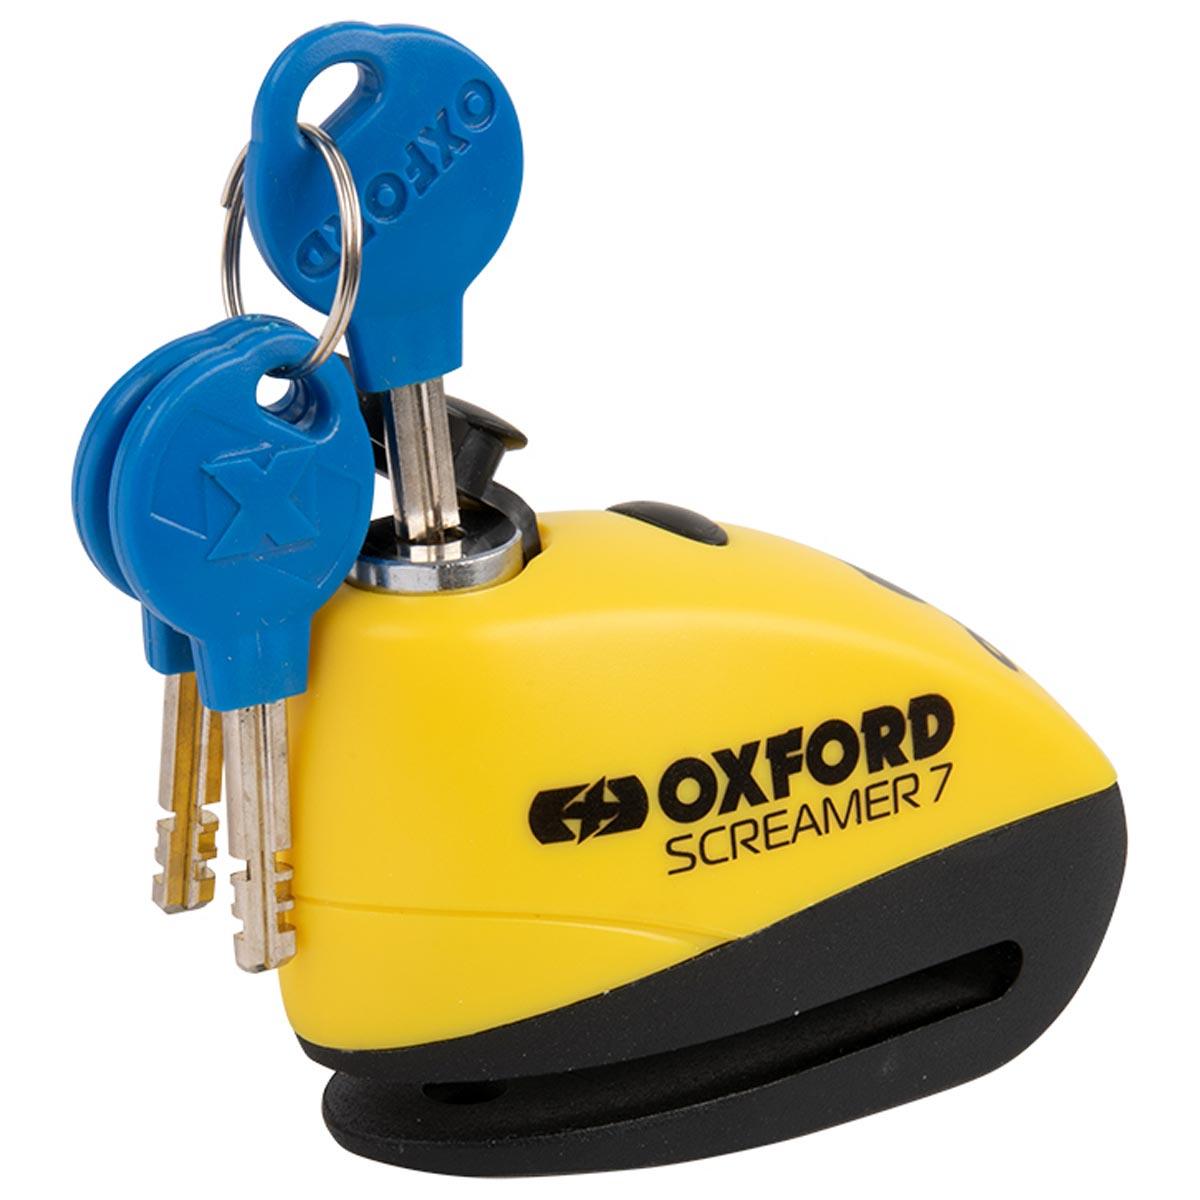 Buy Oxford Screamer 7 Alarm Disc Lock Online